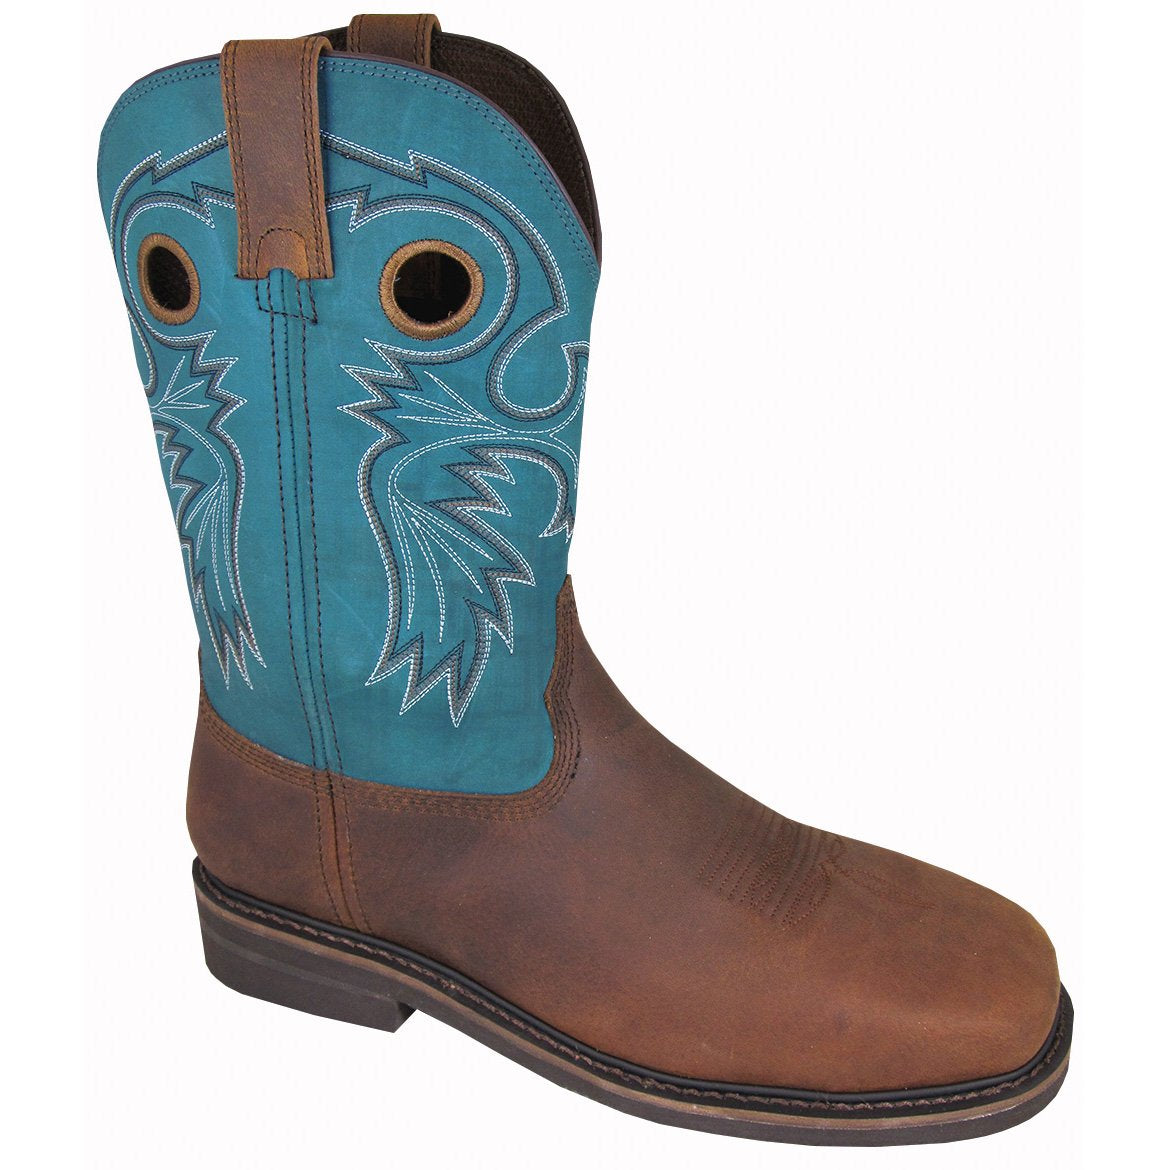 Smoky Mountain Men's Brown/Blue Steel Toe Boot